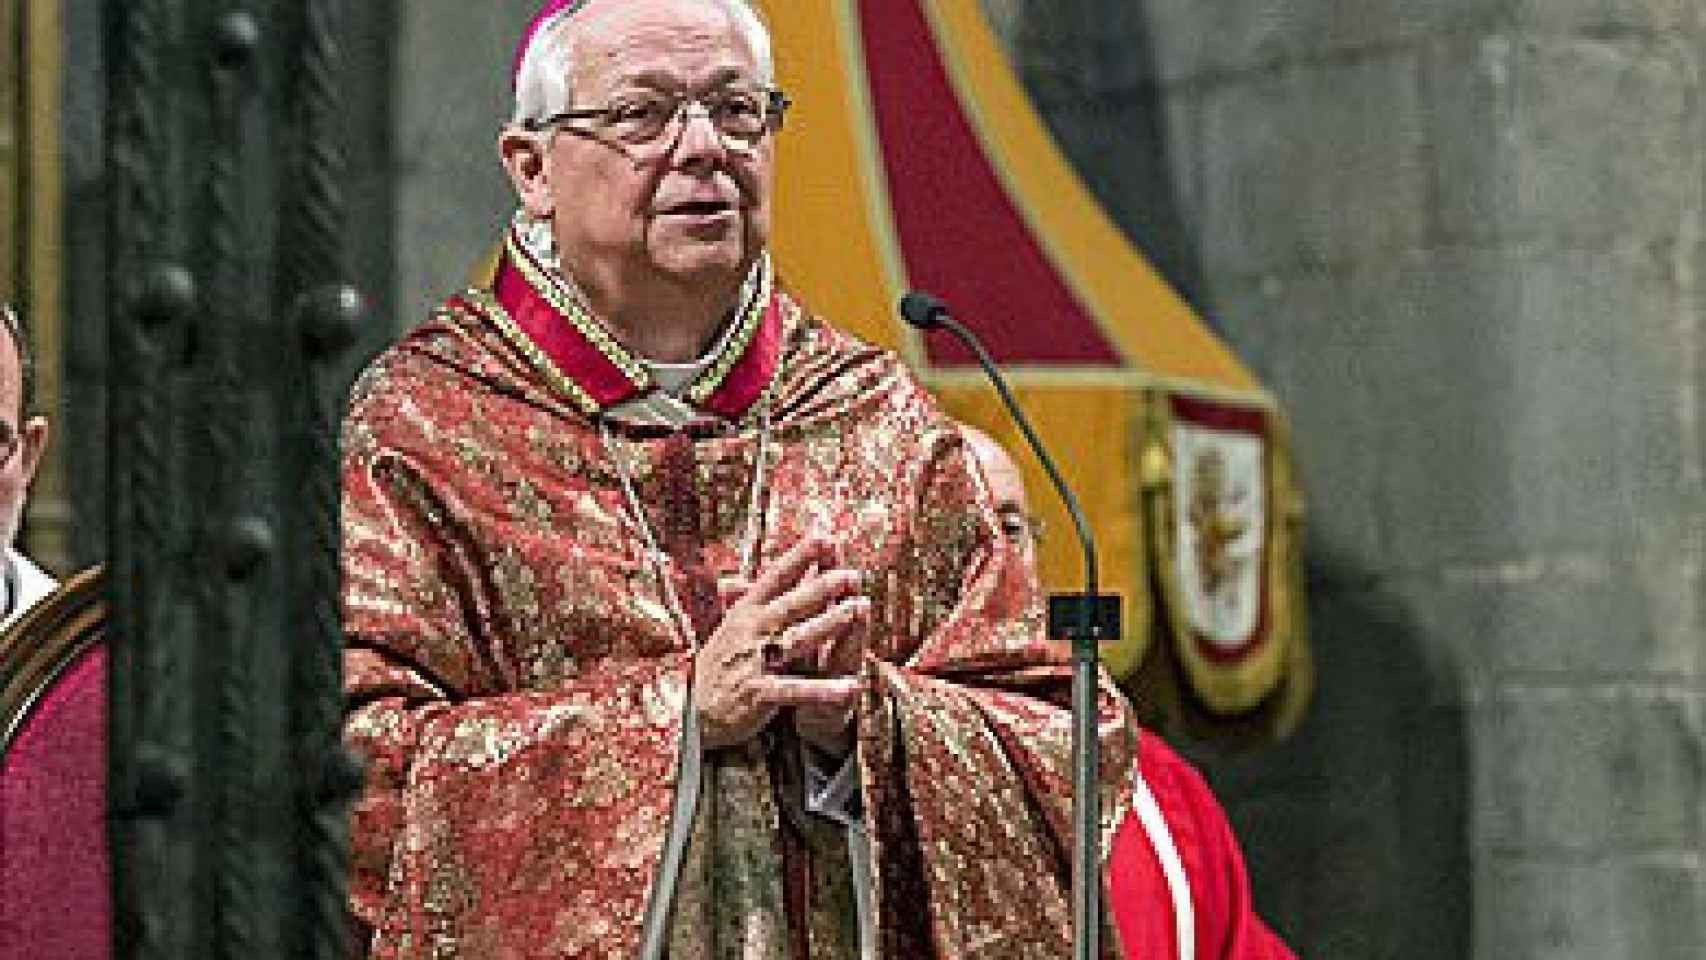 El obispo de Gerona, Francesc Pardo